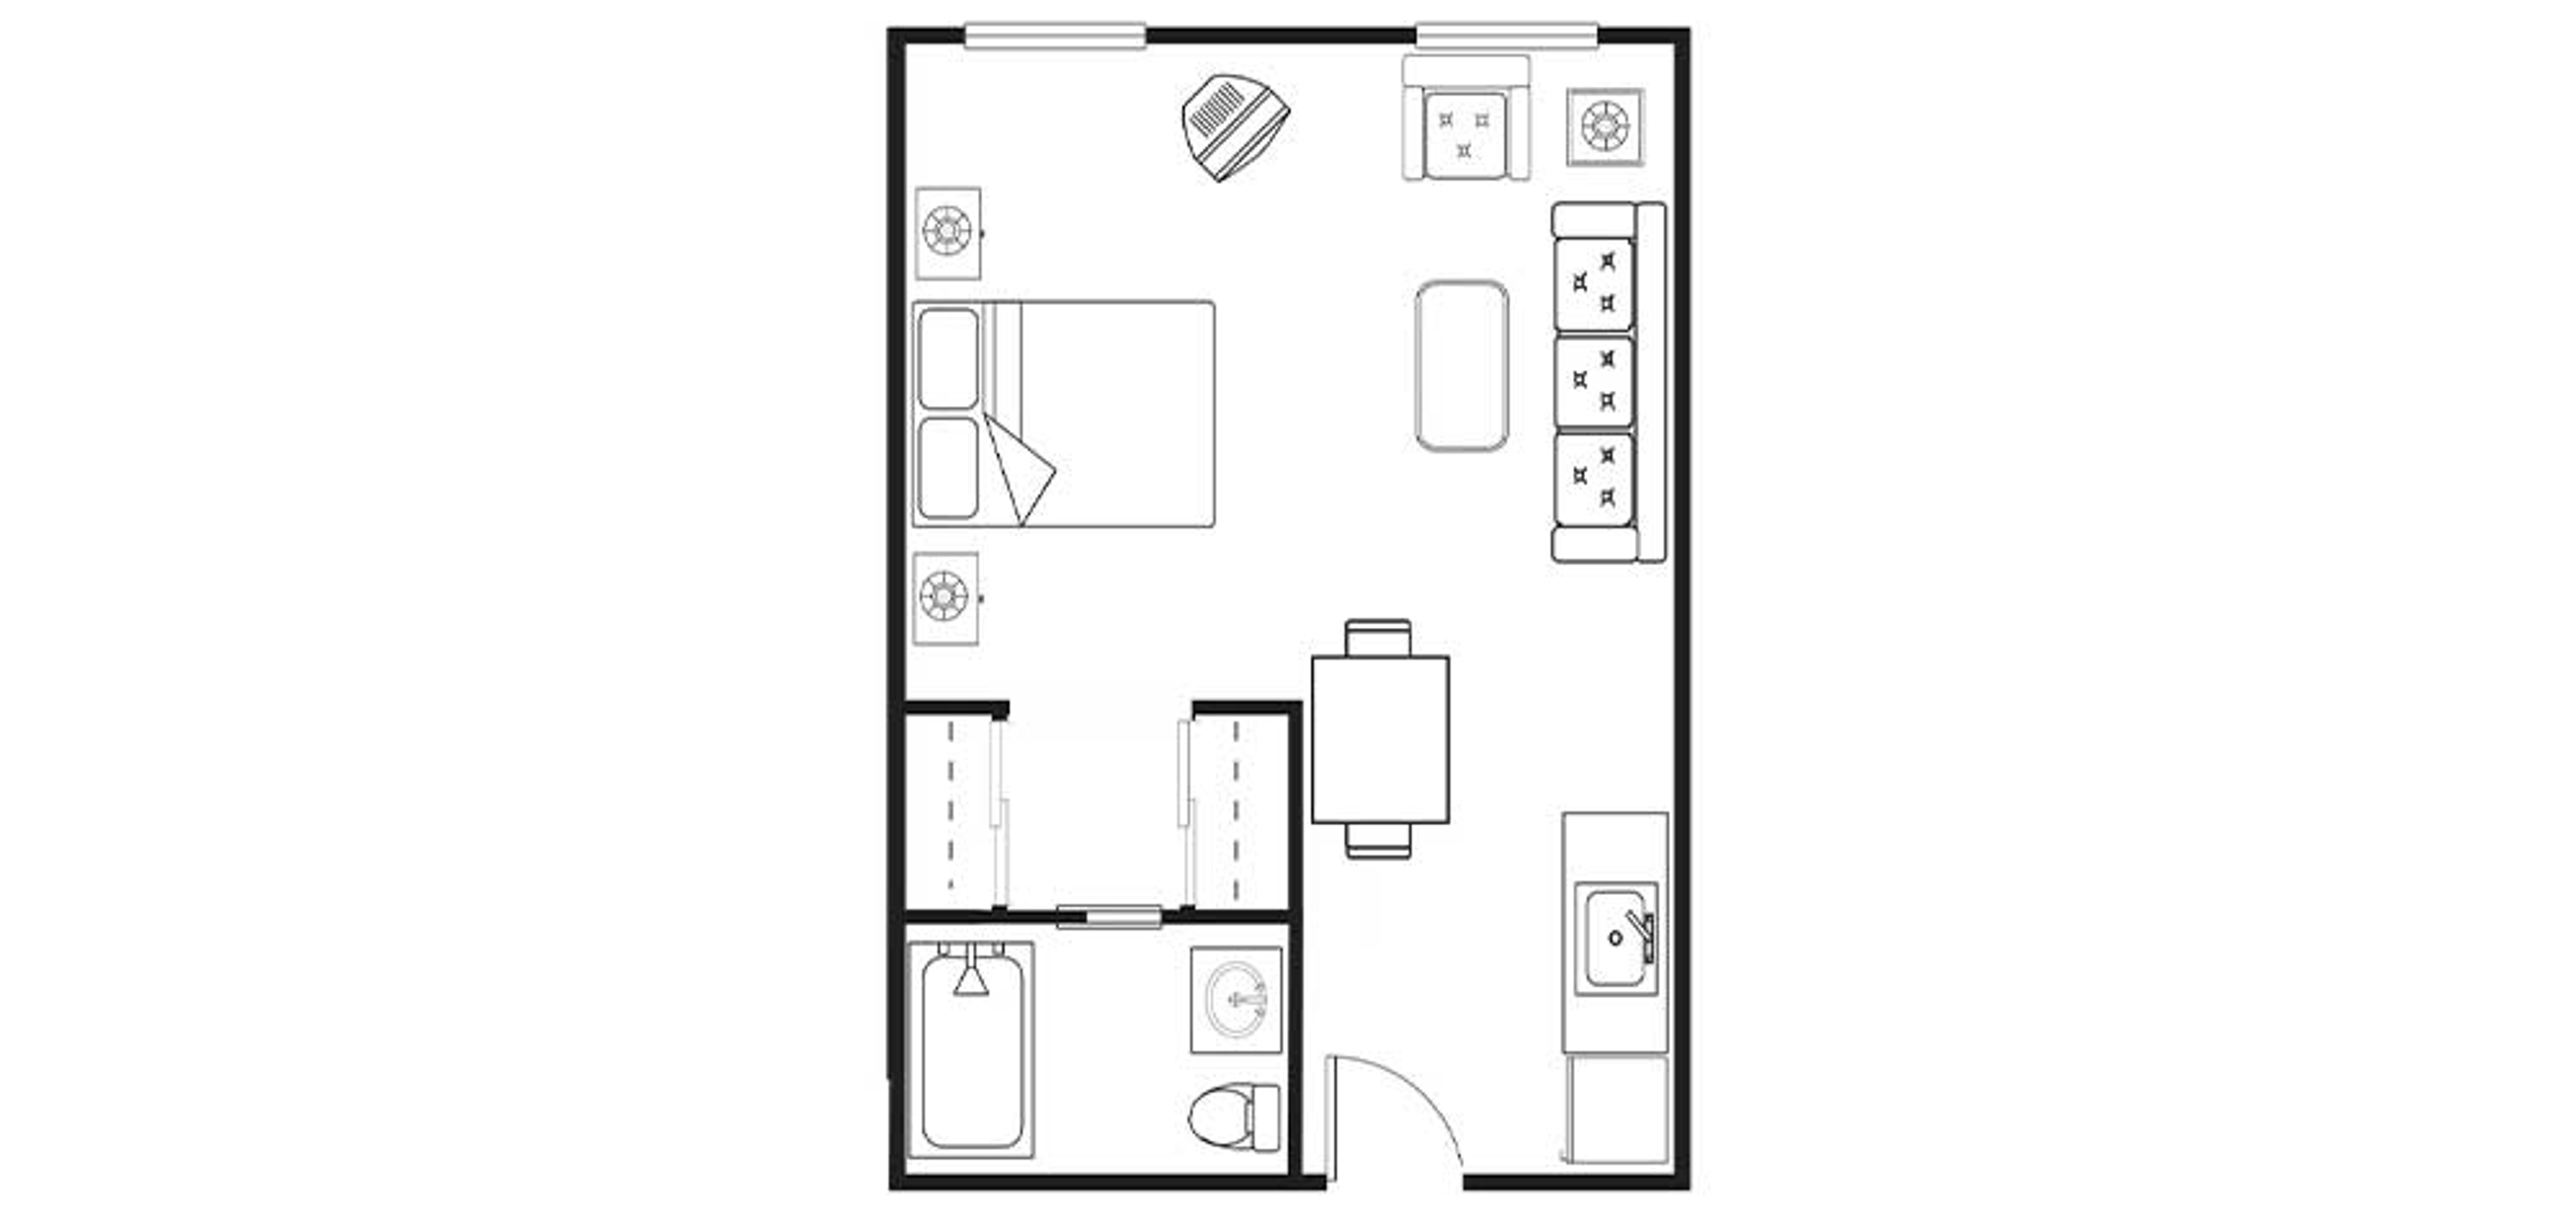 Floorplan - Redwood Heights - S1 Studio 425 sq. ft. Assisted Living